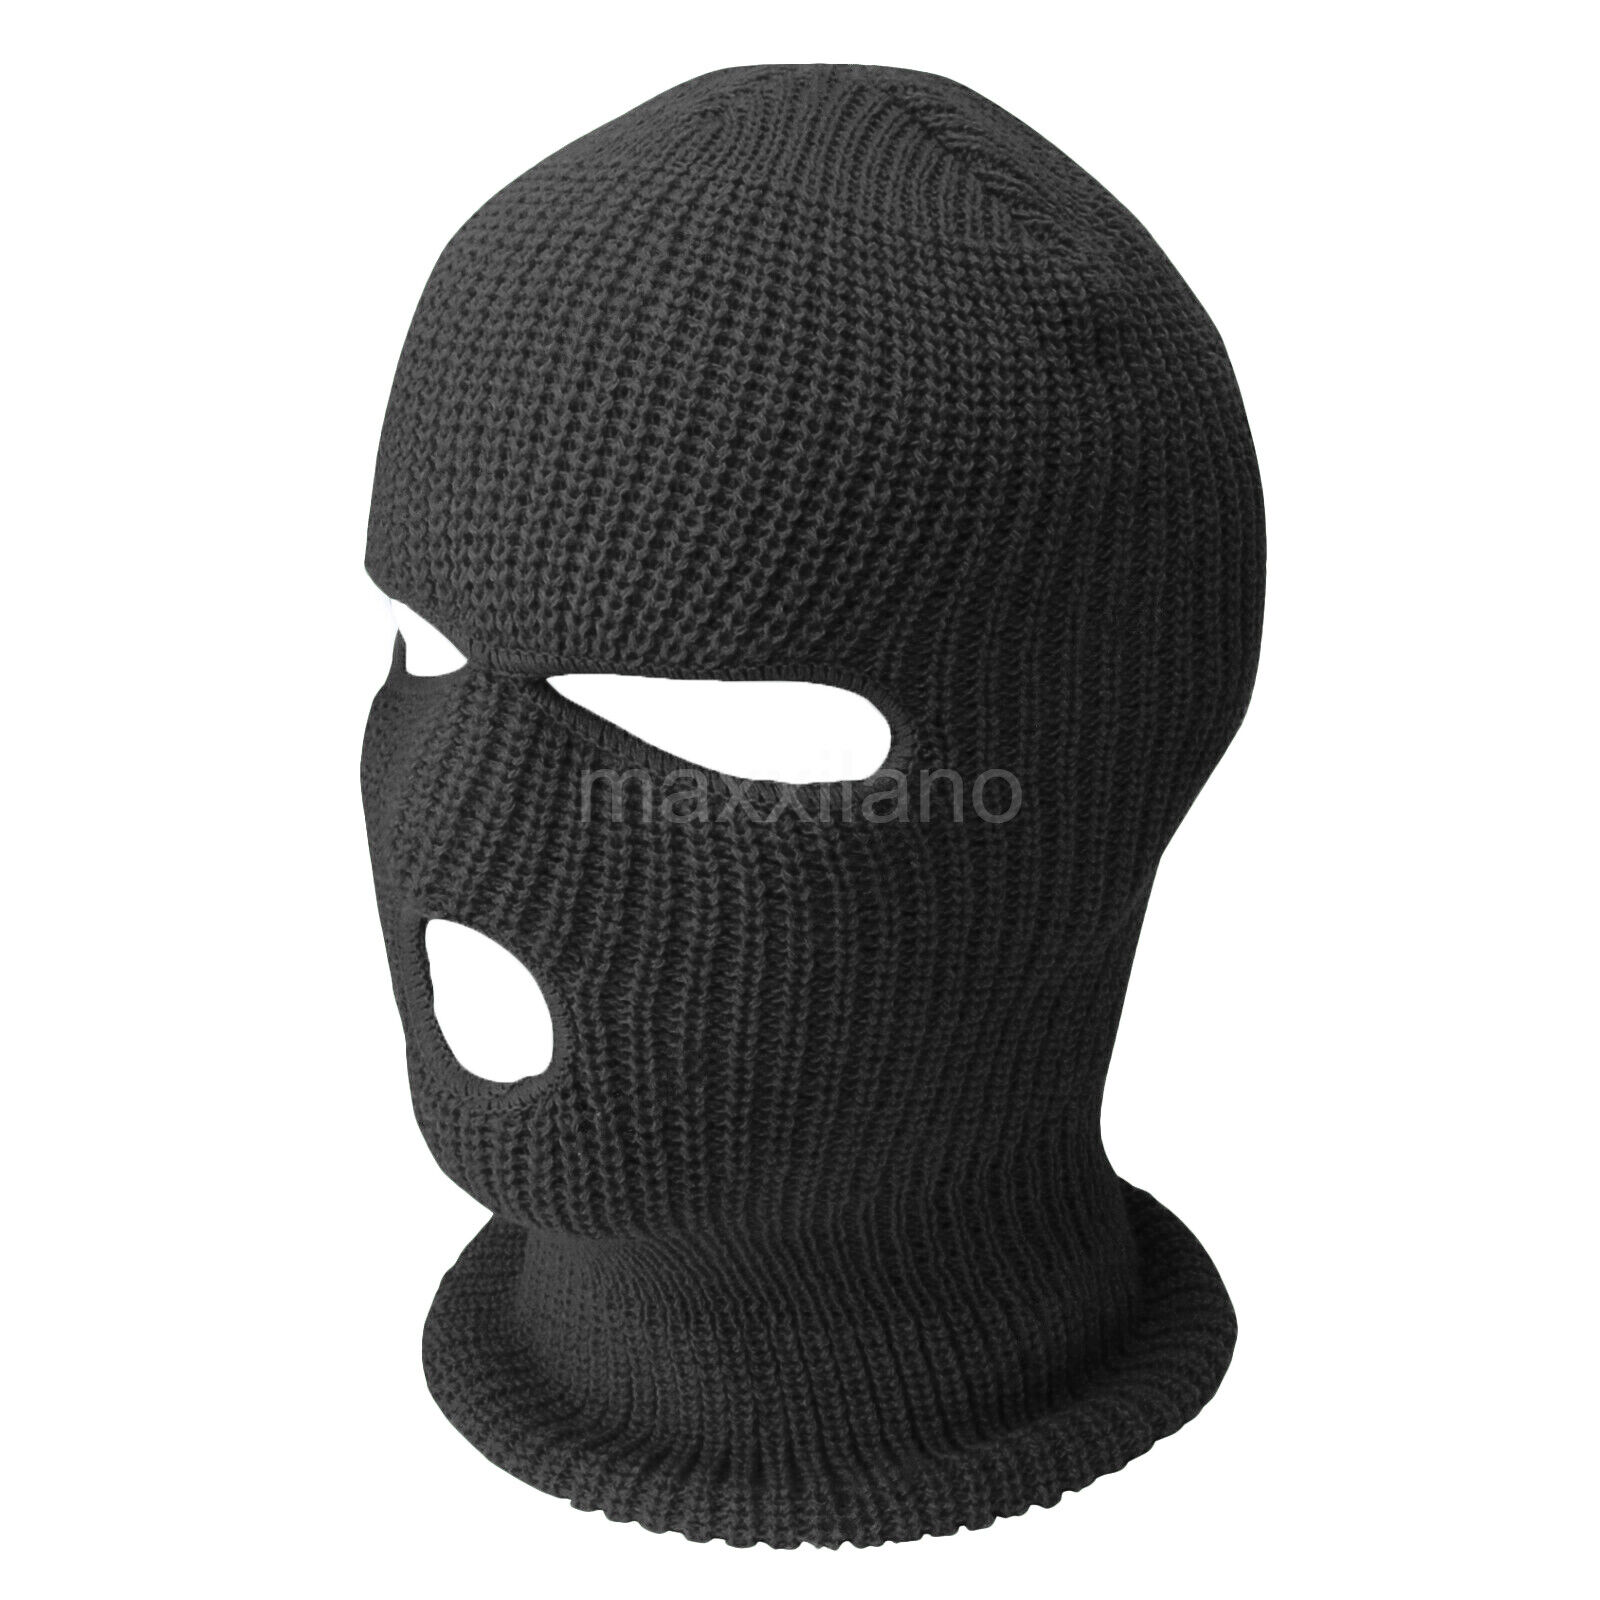 ::Face Mask Ski Mask Winter Cap 3 Hole Balaclava Beanie Hat Hood Tactical Warm Men